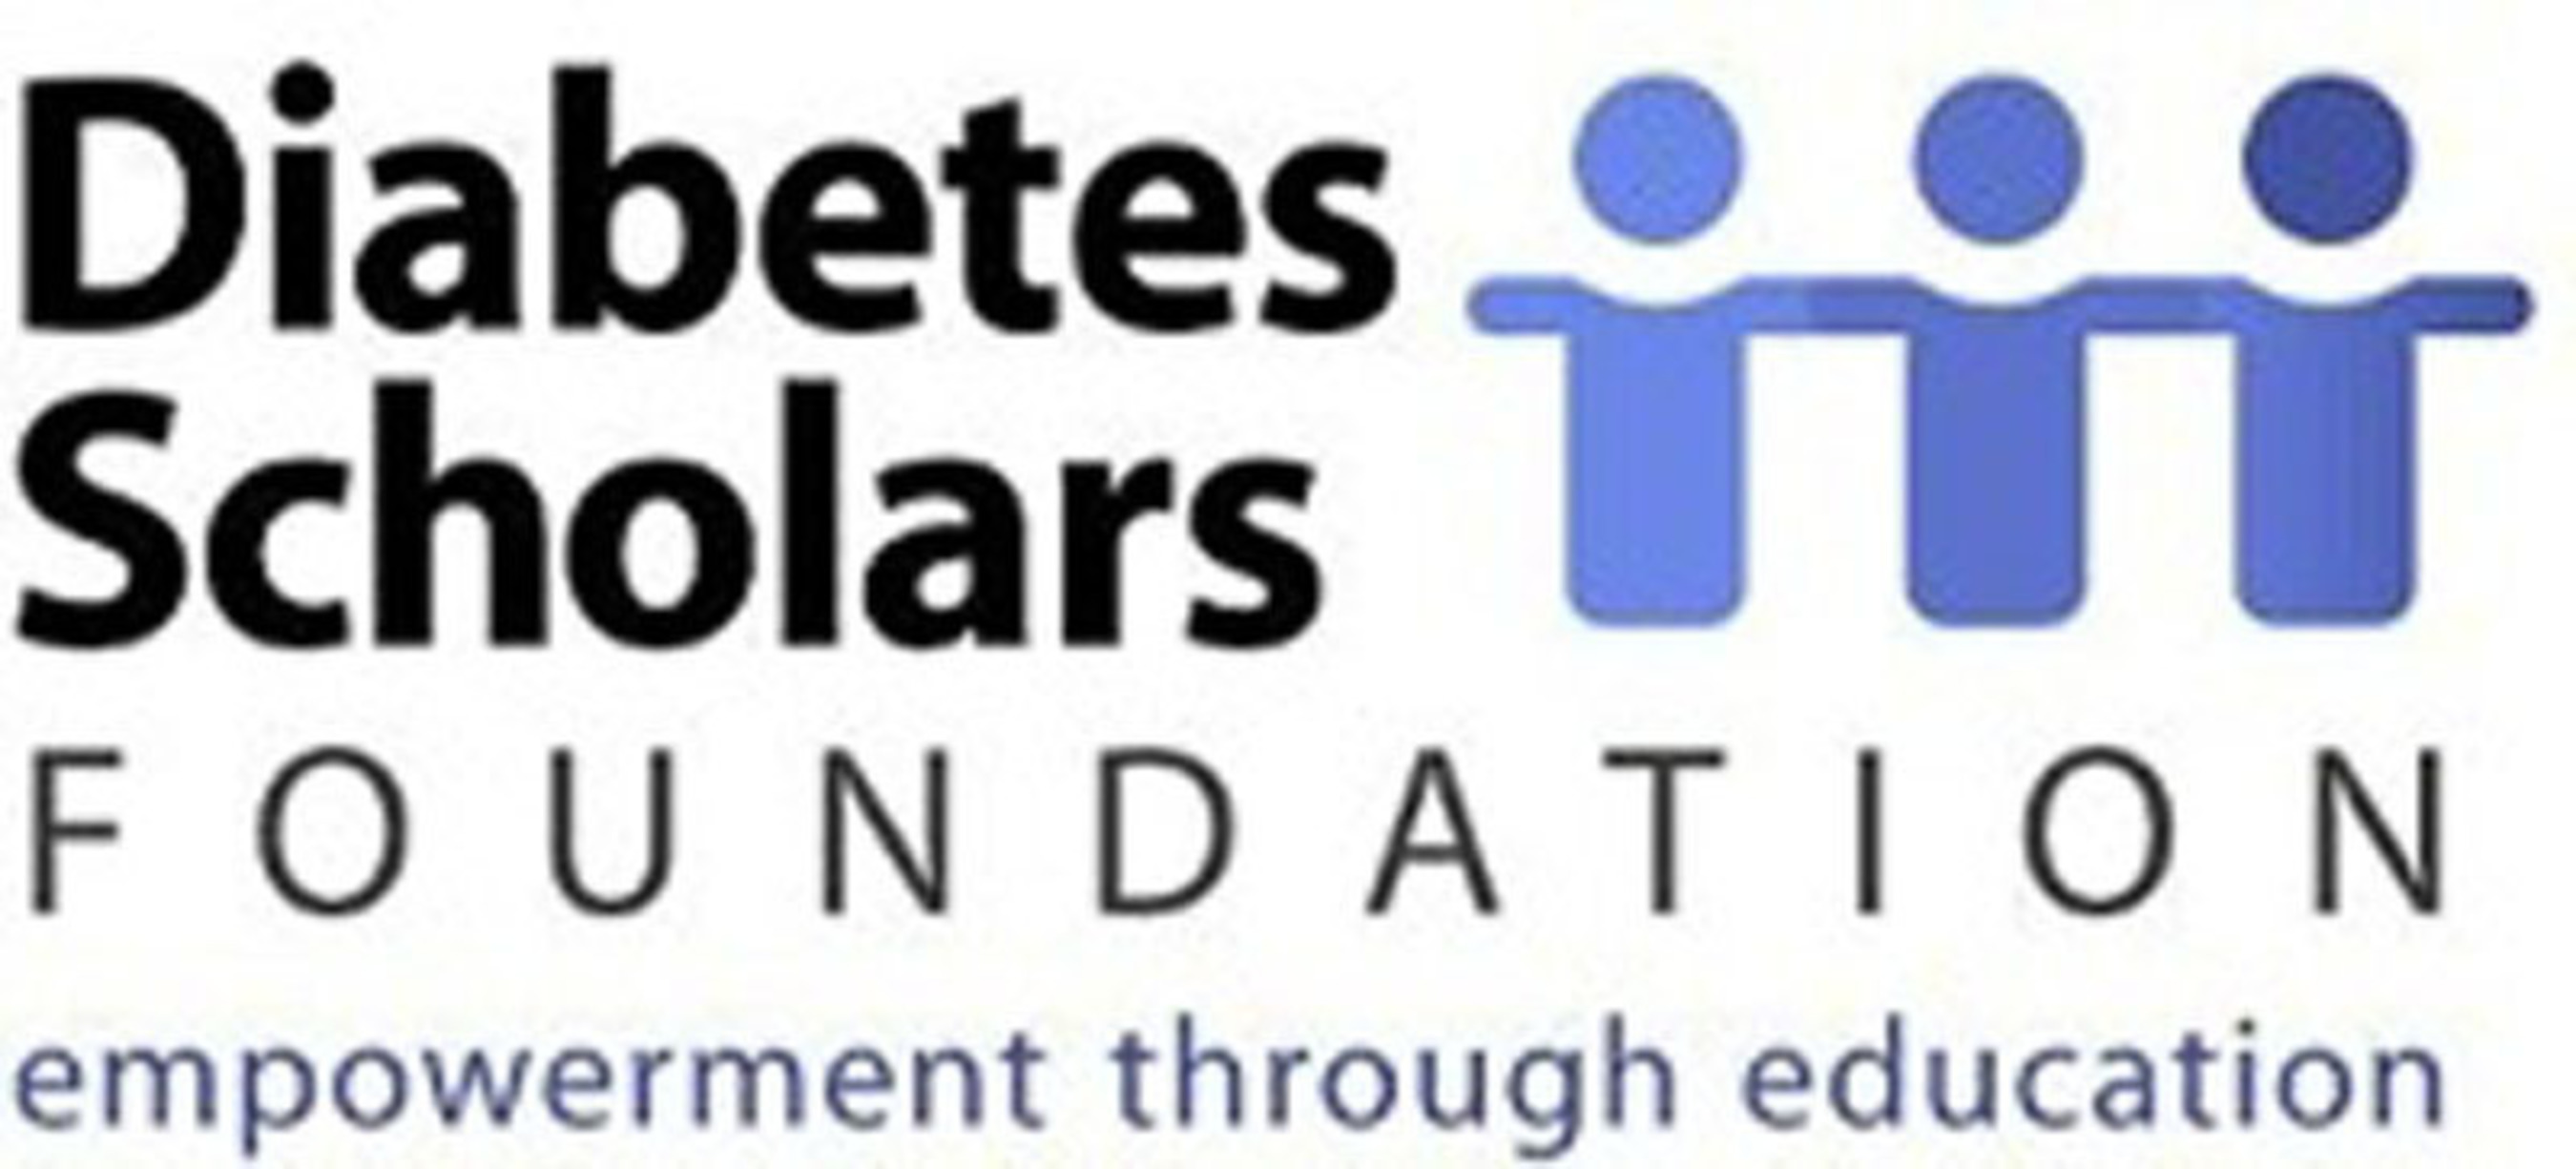 Diabetes Scholars Foundation.